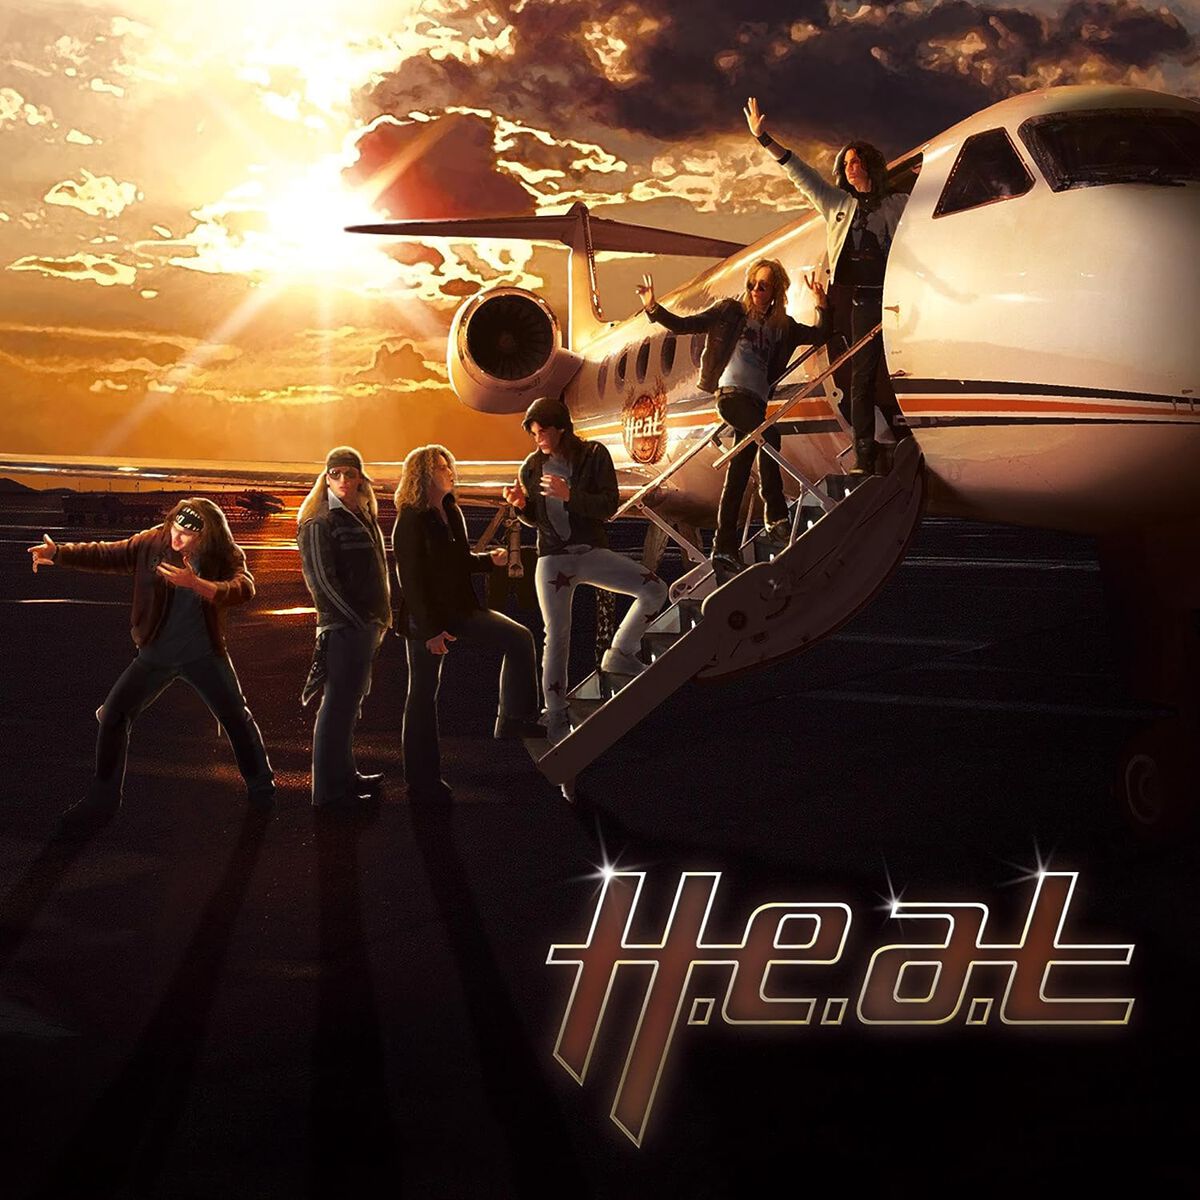 Heat von H.E.A.T - 2-CD (Digipak, Limited Edition)